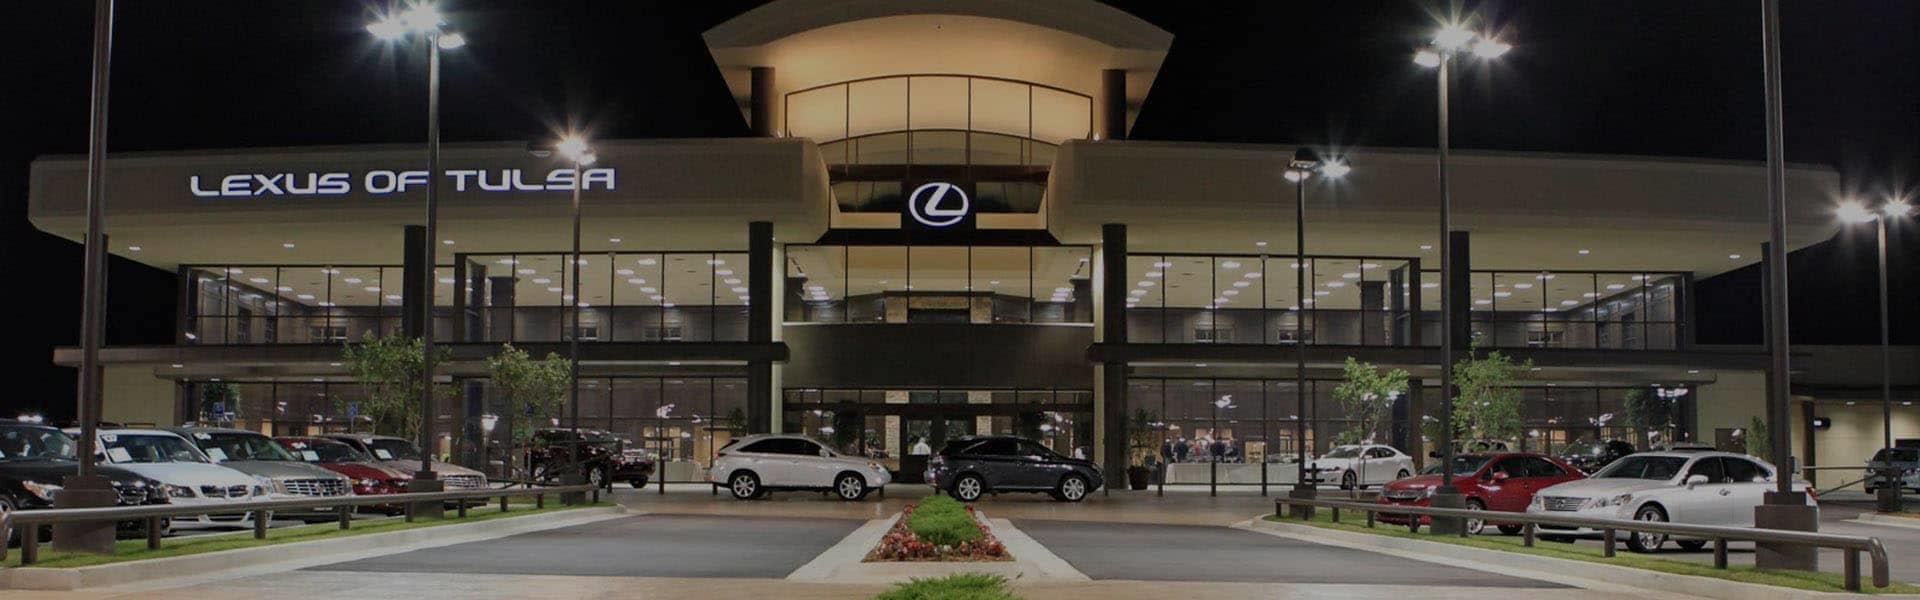 Lexus of Tulsa Dealership Image dark 5:22